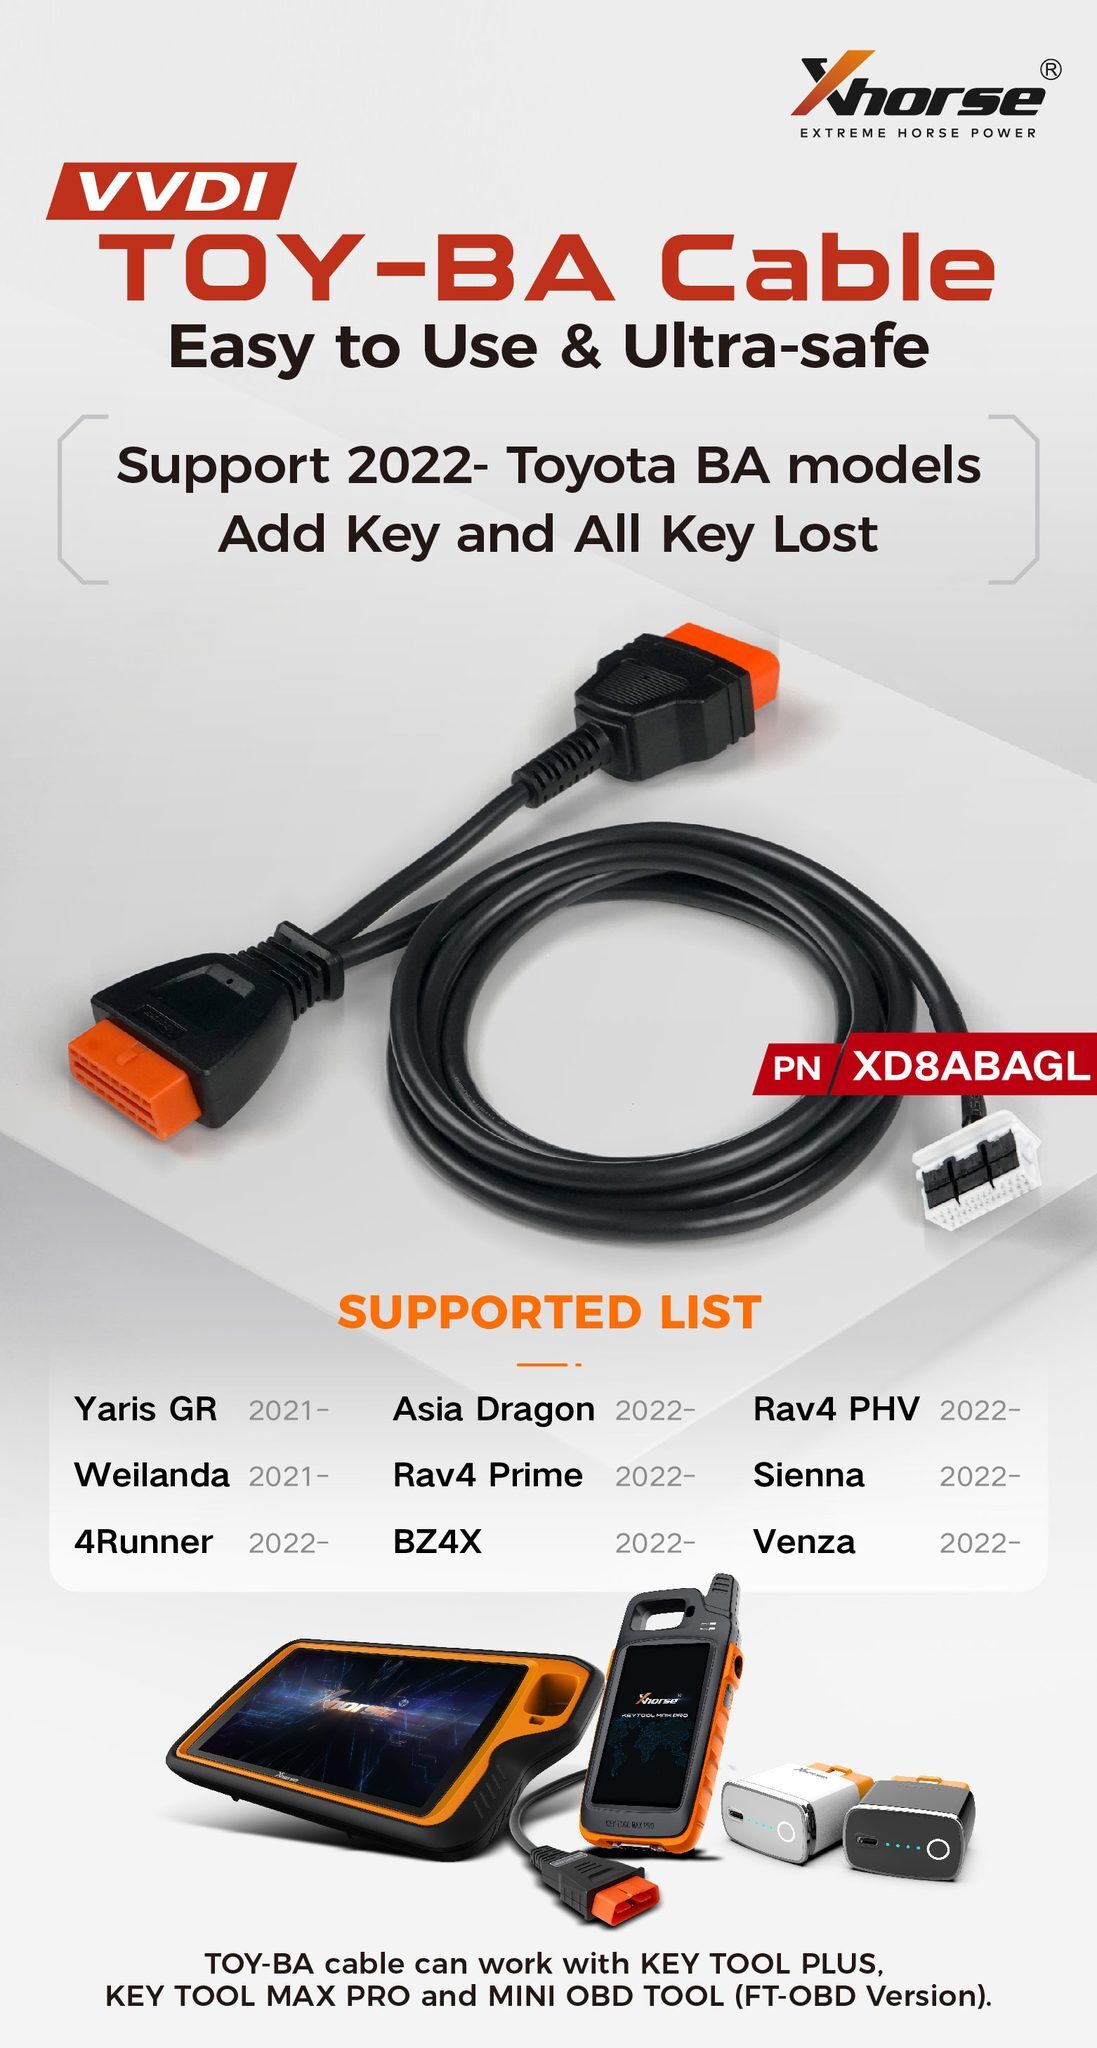  Xhorse VVDI TOY-BA Cable KD8ABAGL